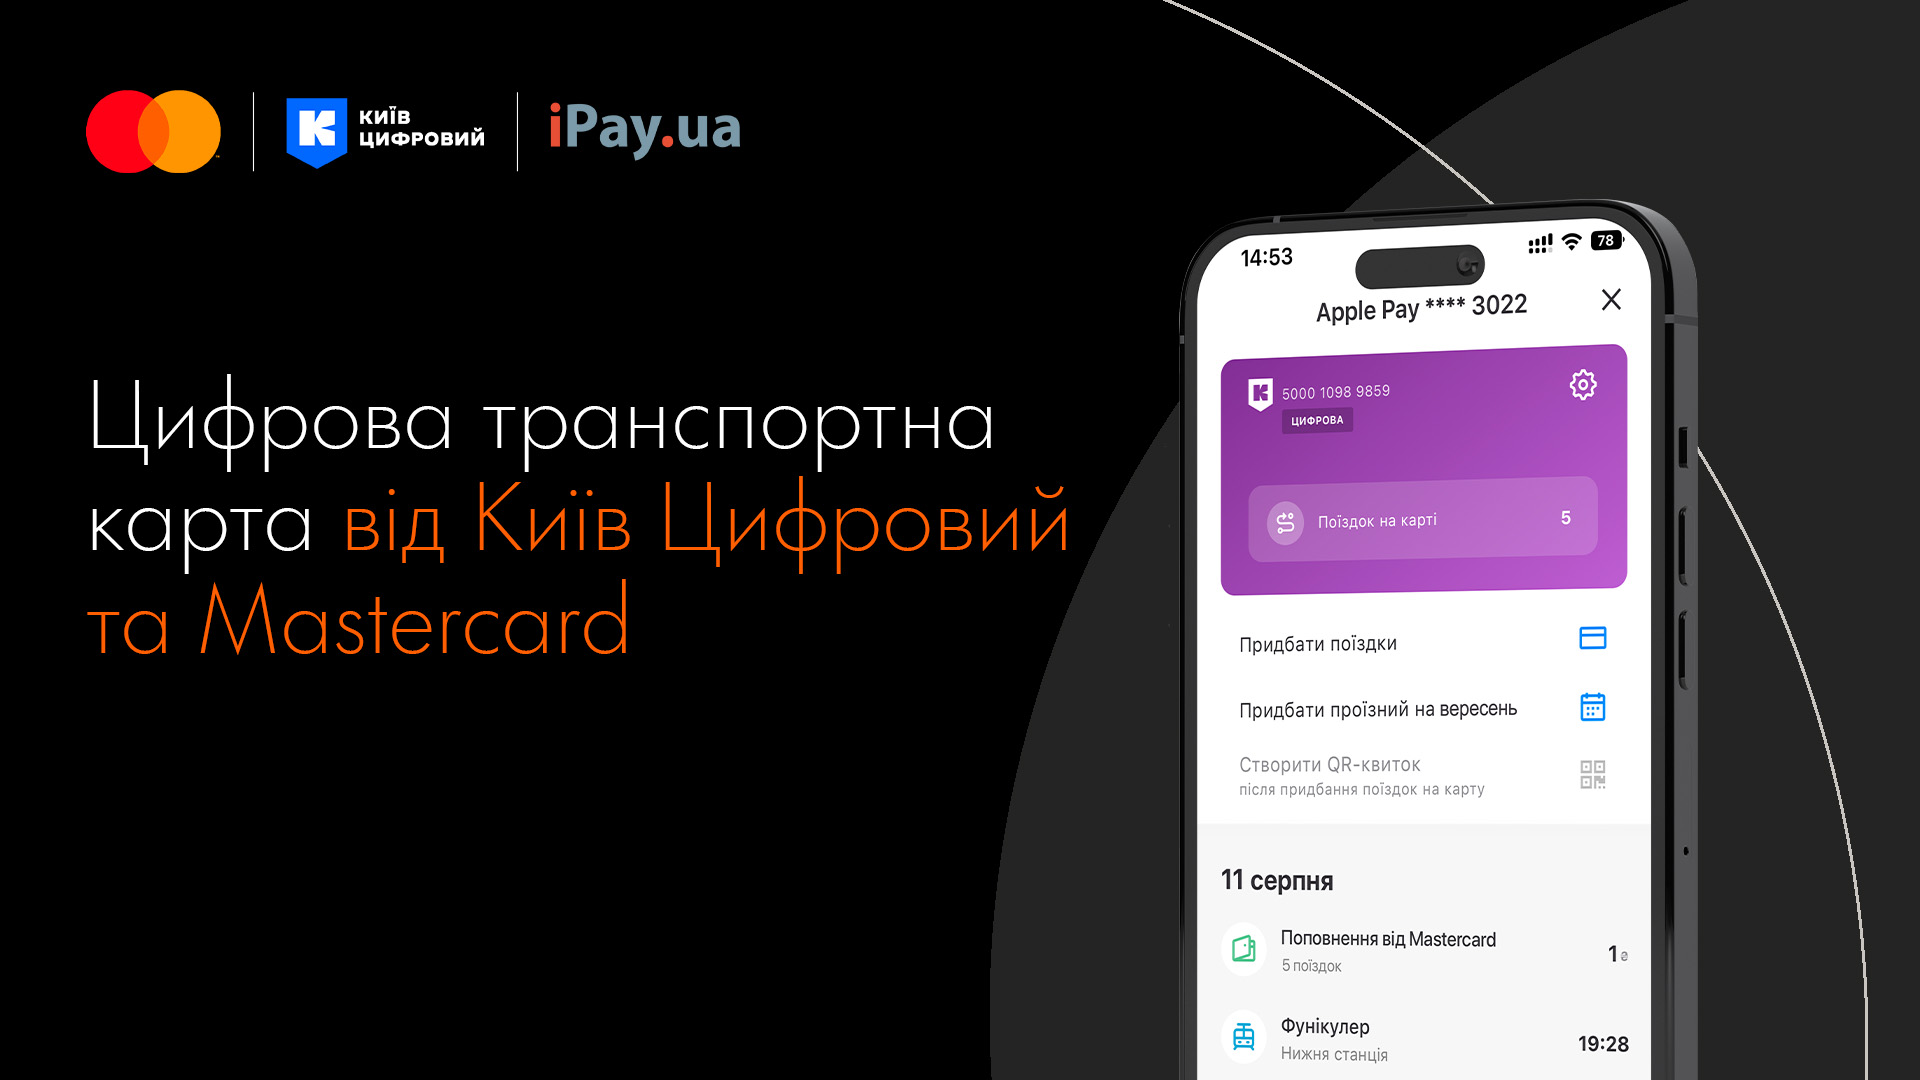 Mastercard Kyiv Digital iPay.ua image 2